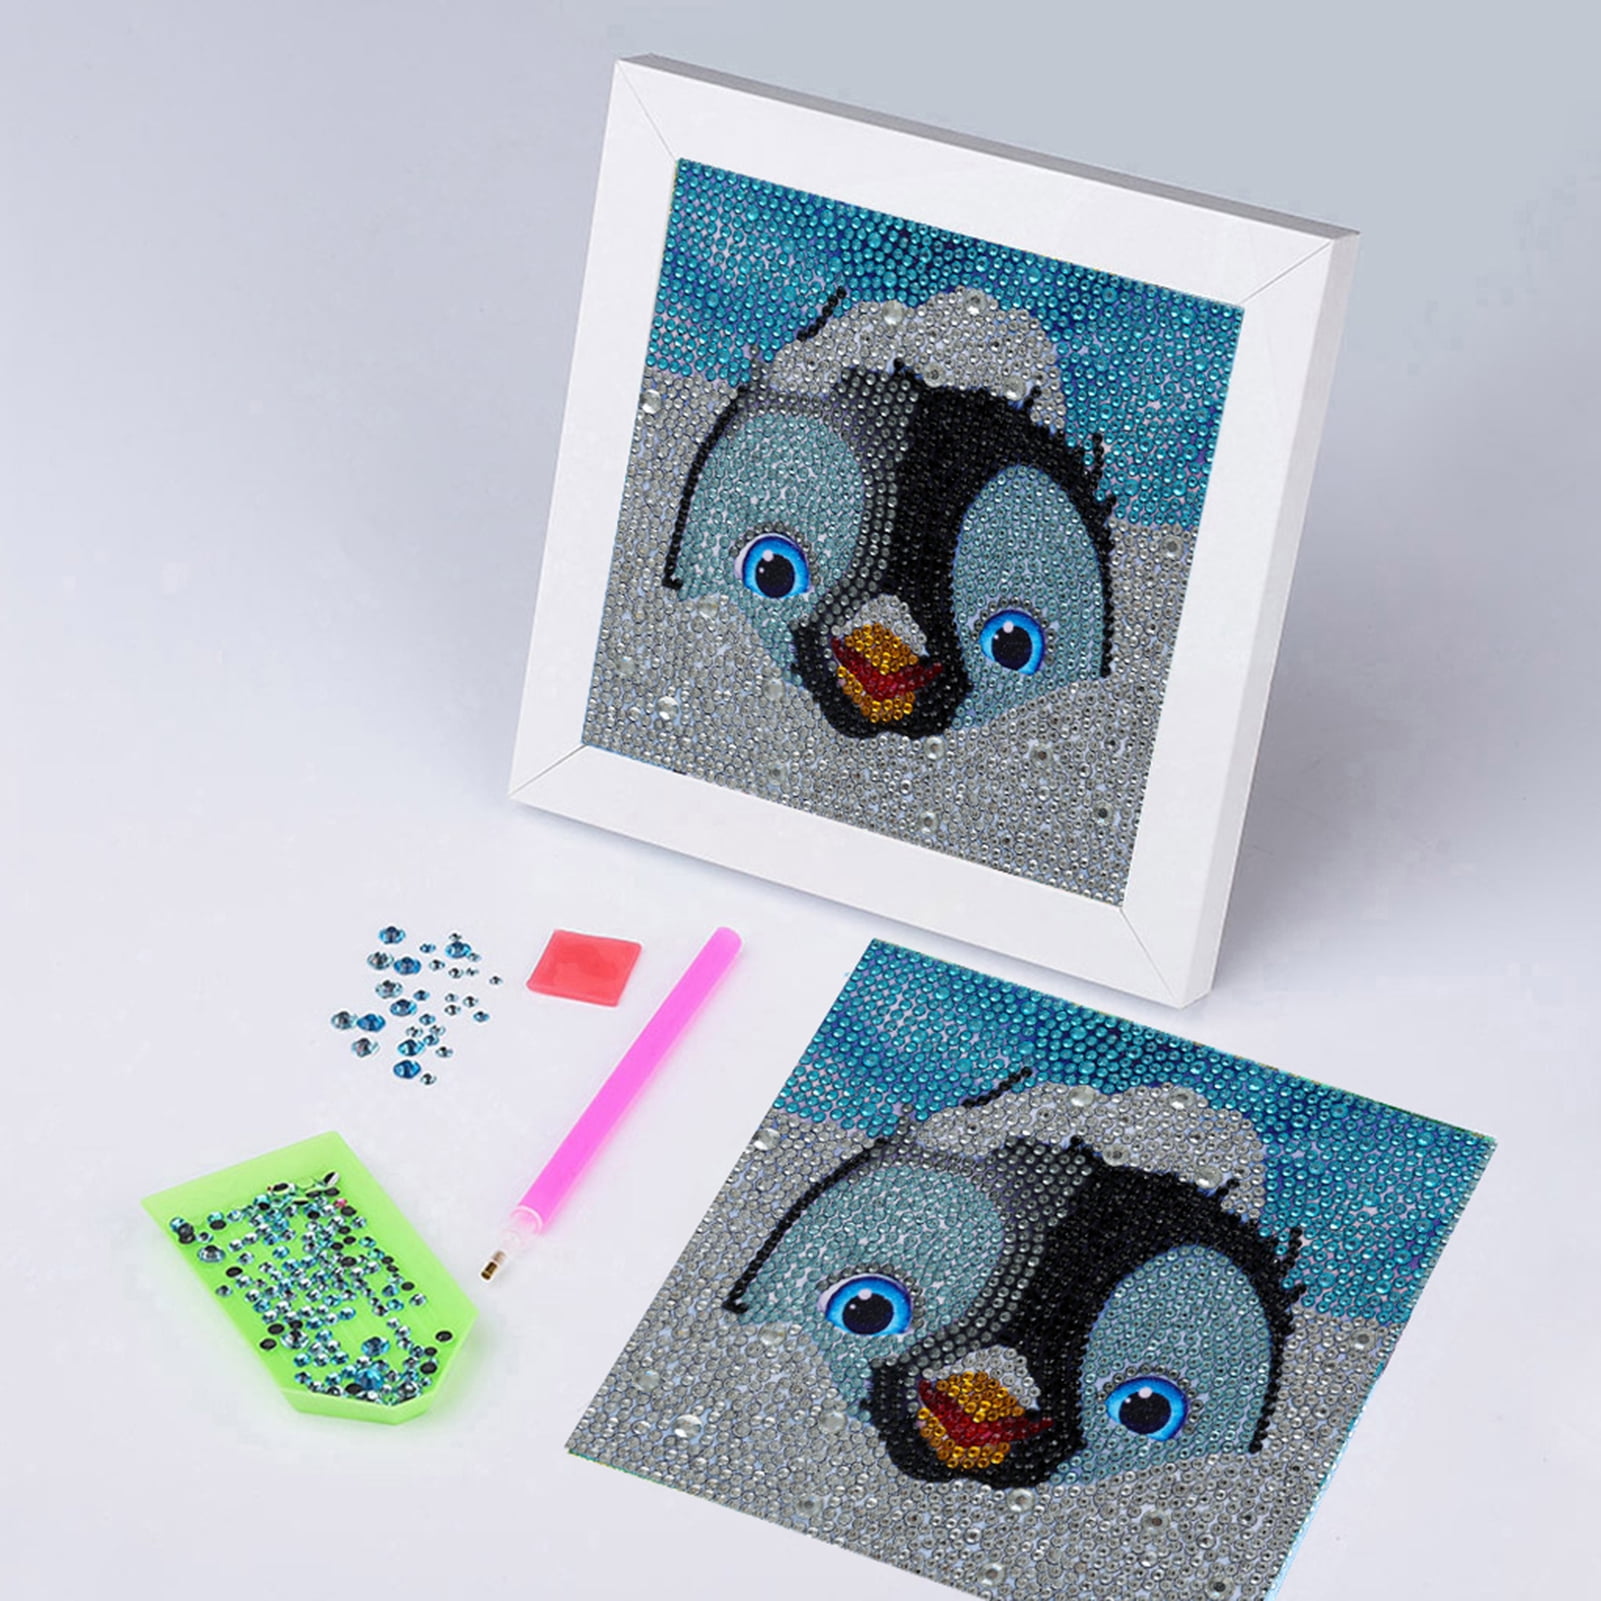 Jungobiu 5D Diamond Painting Kits for Adults Penguin DIY Diamond